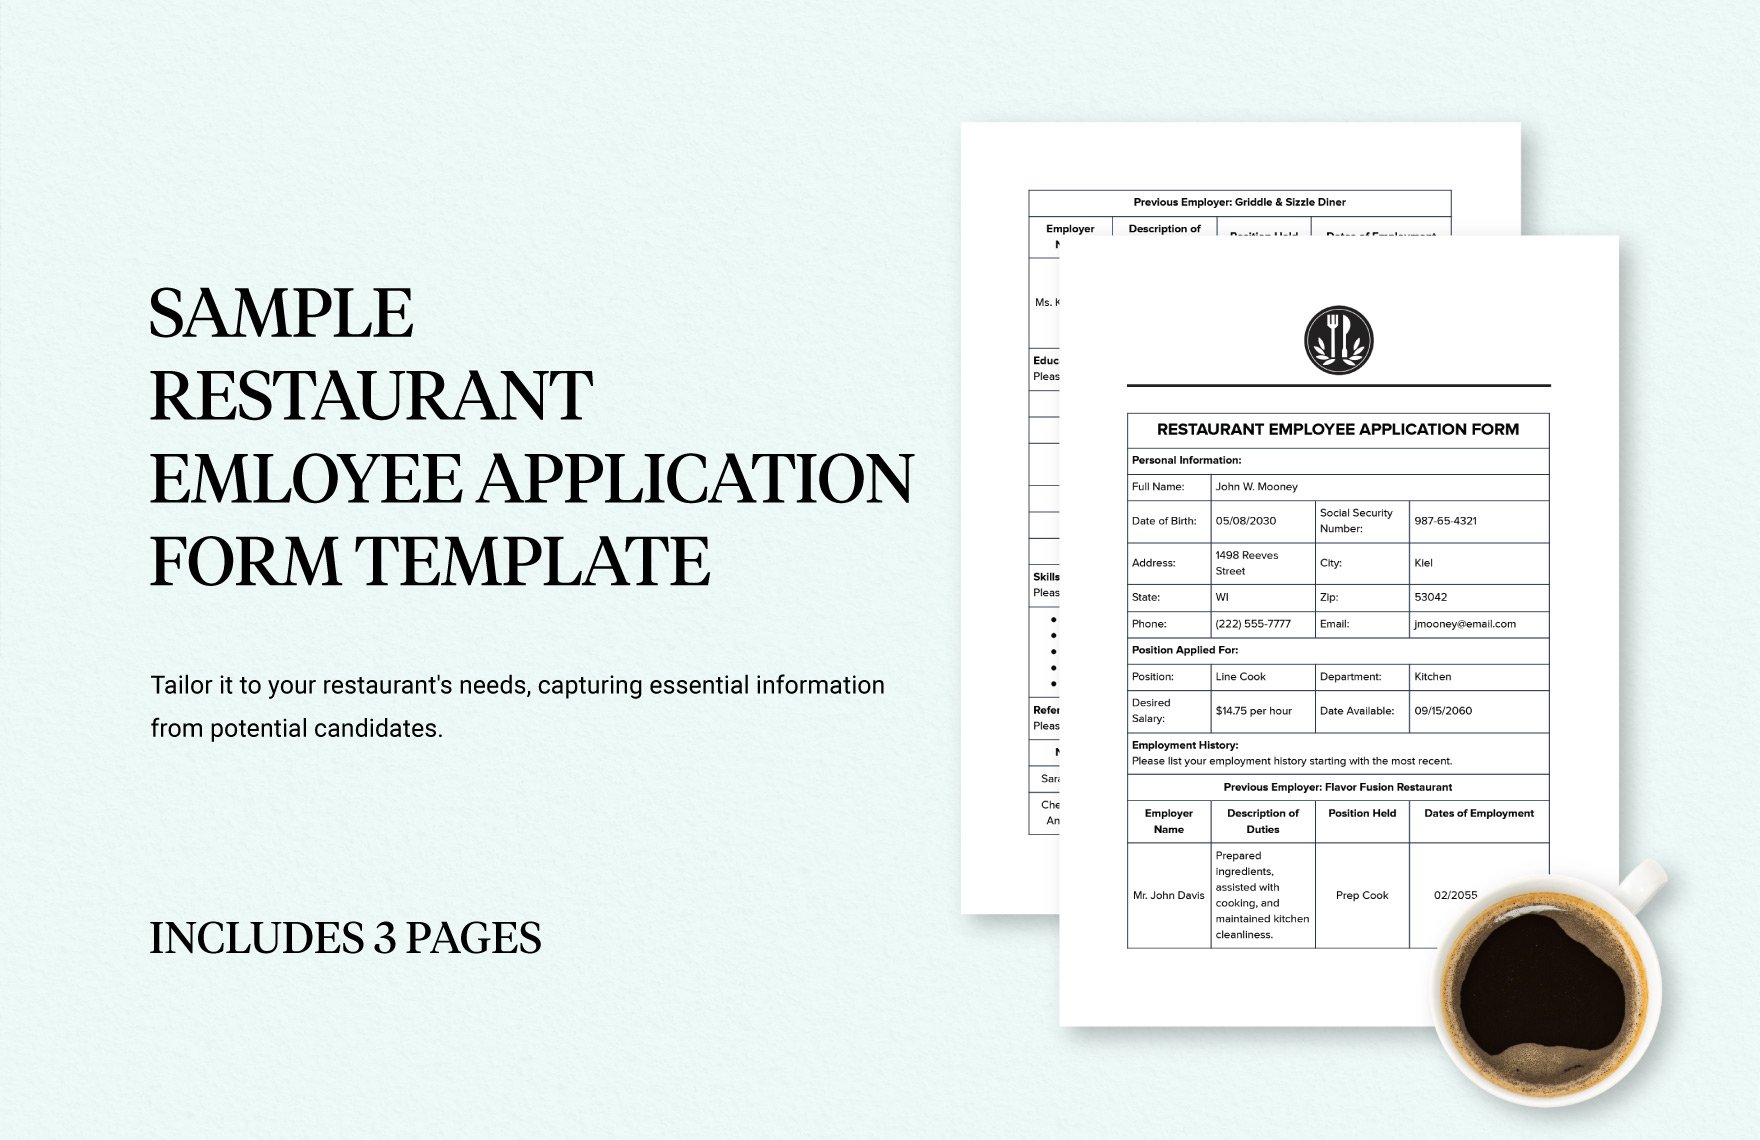 Sample Restaurant Employee Application Form Template